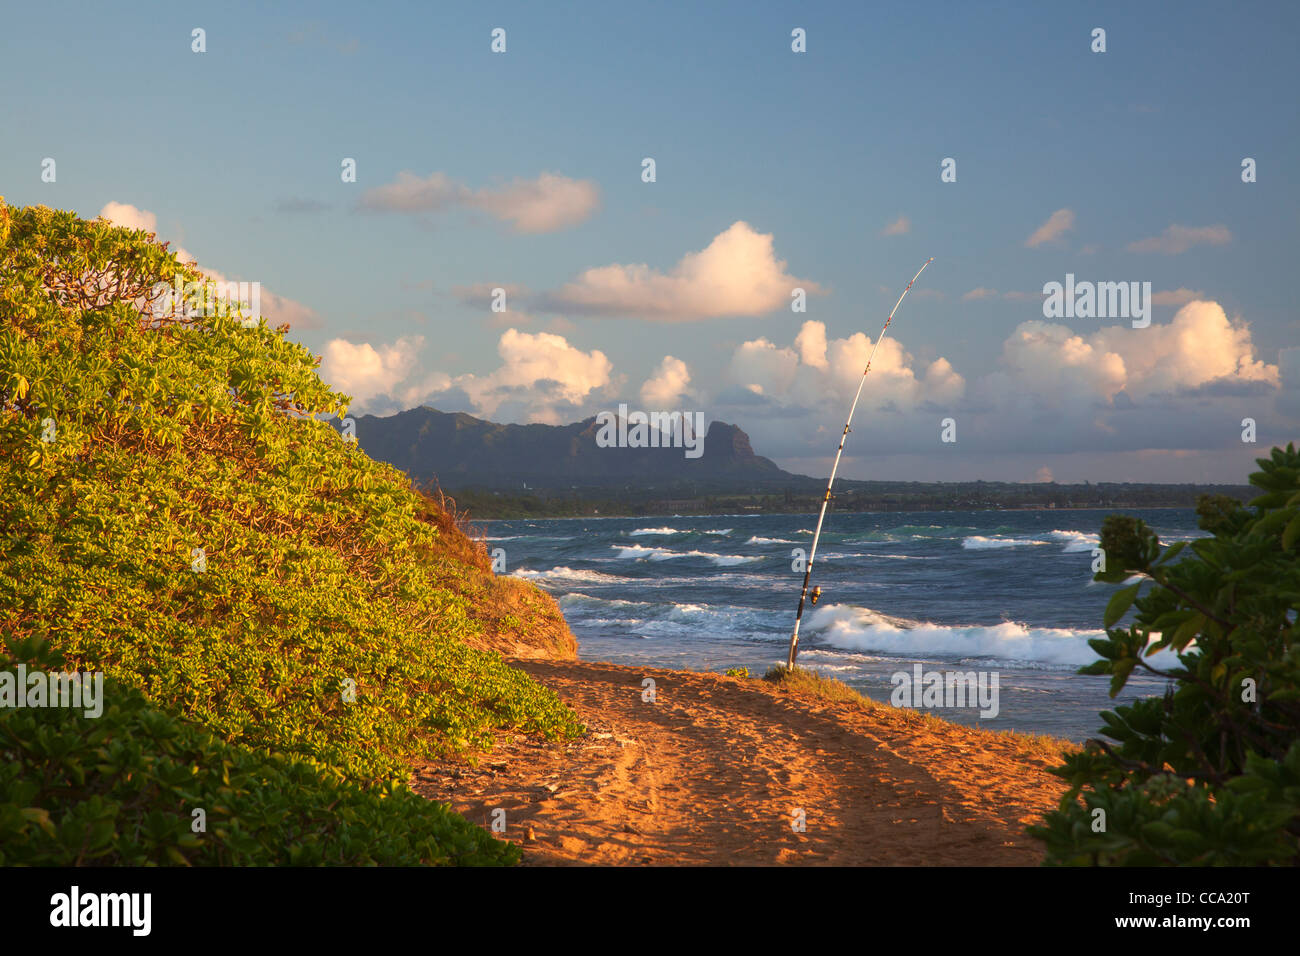 Angeln am Nukoli'i Strand, auch bekannt als Küchen, Kauai, Hawaii. Stockfoto